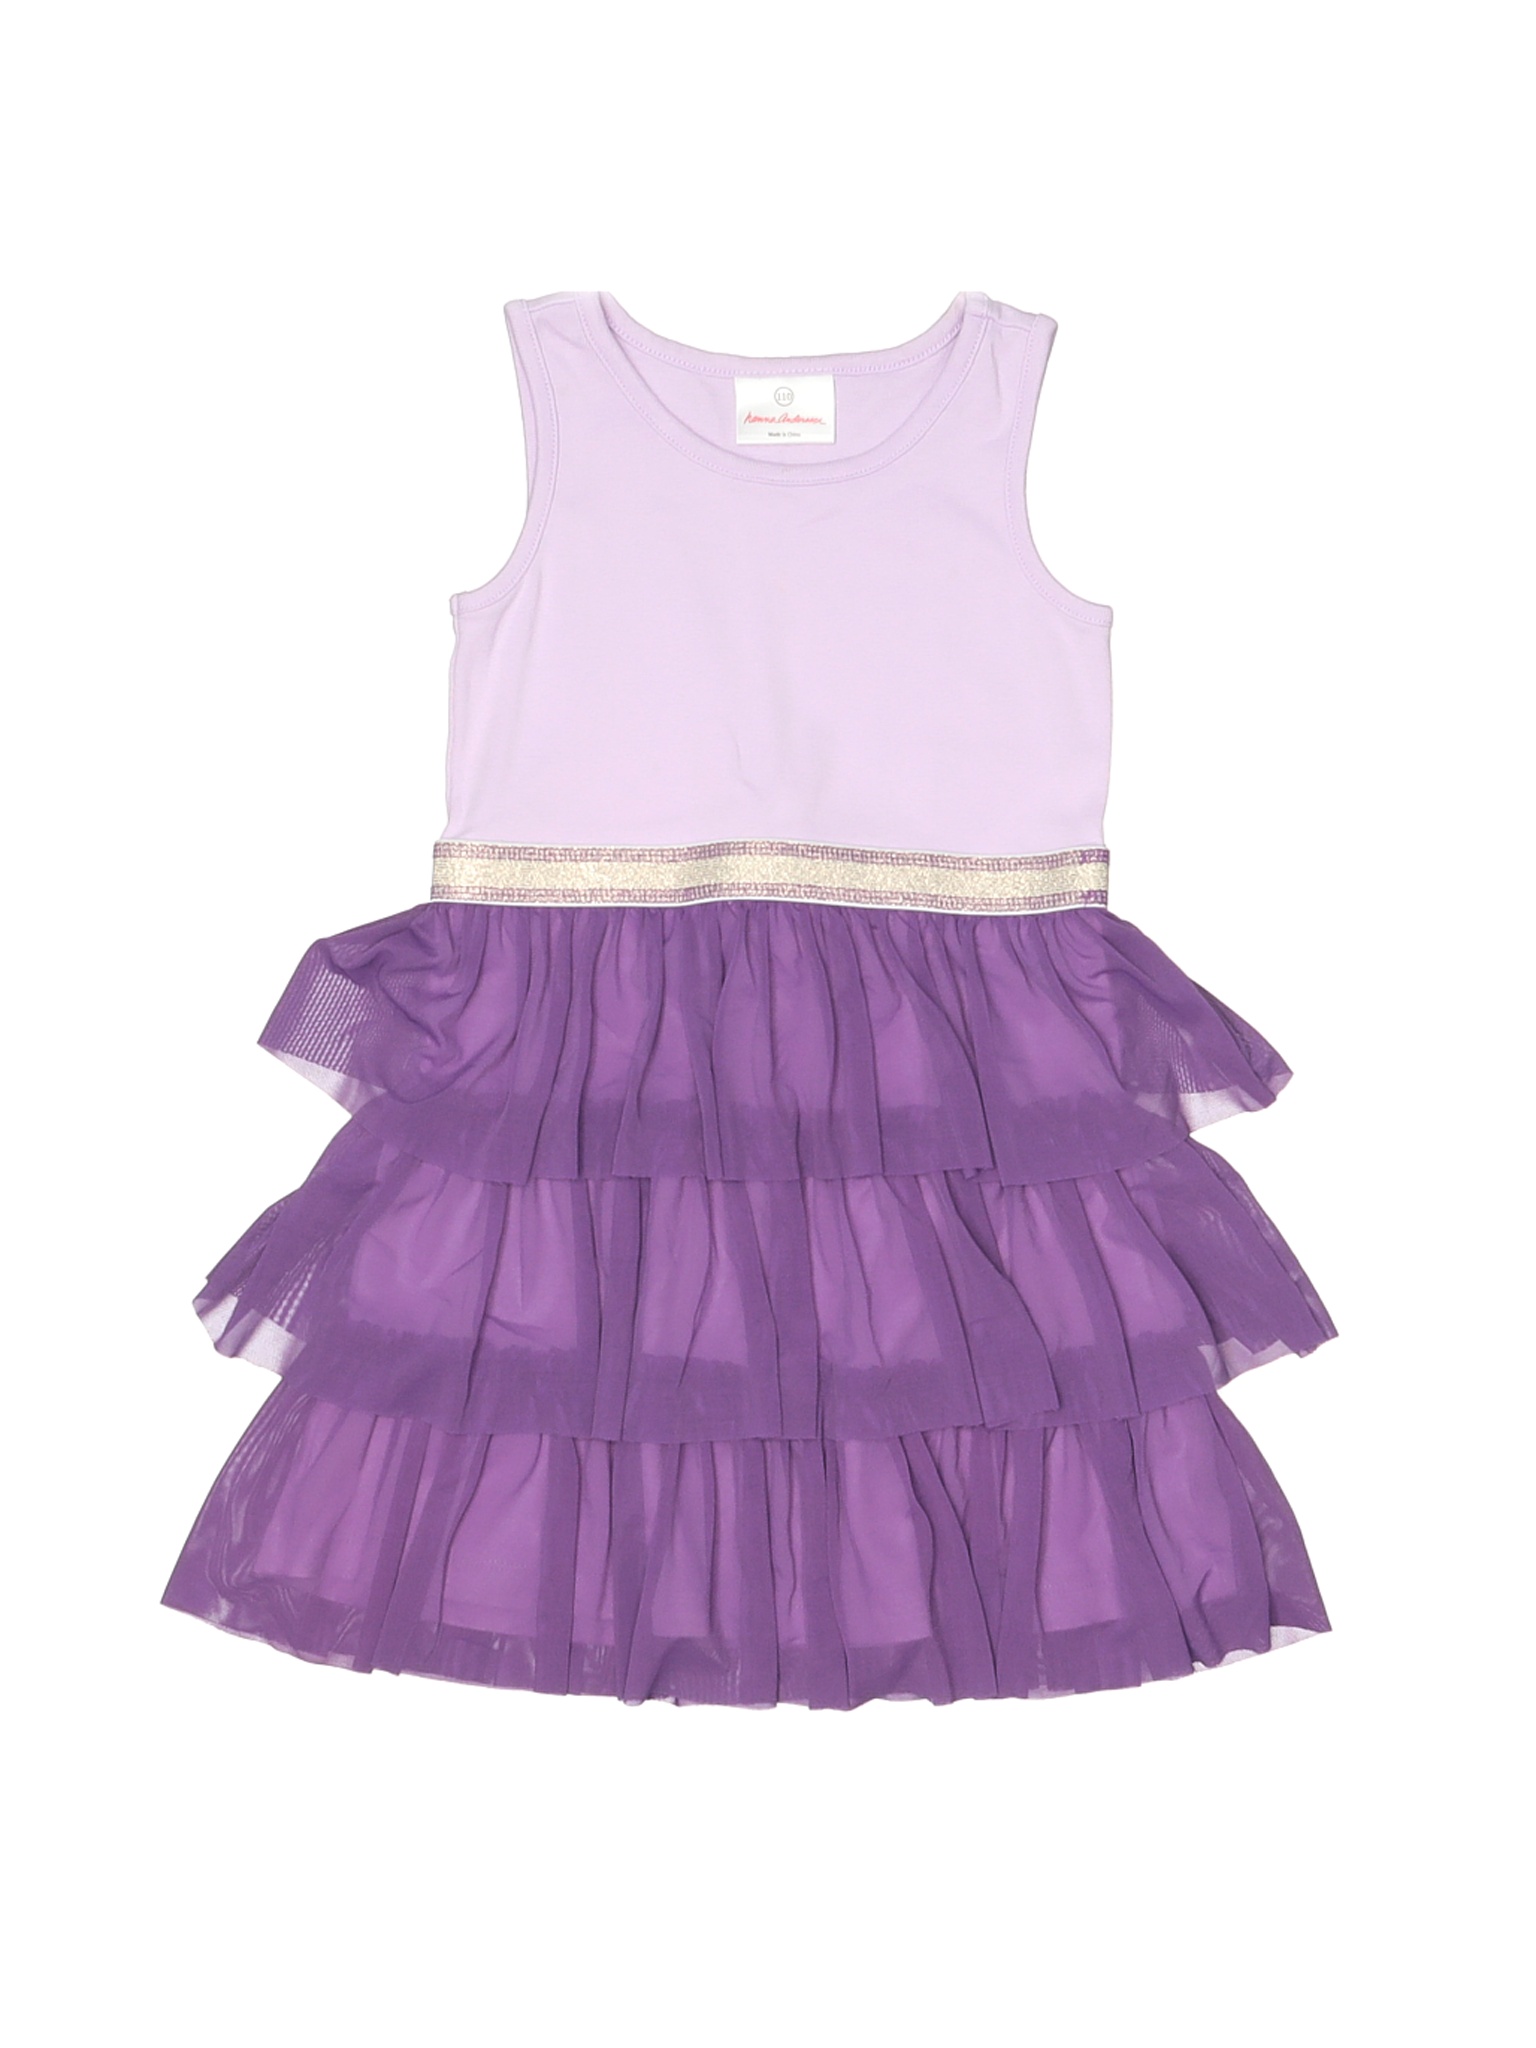 Hanna Andersson Girls Purple Dress 110 cm | eBay